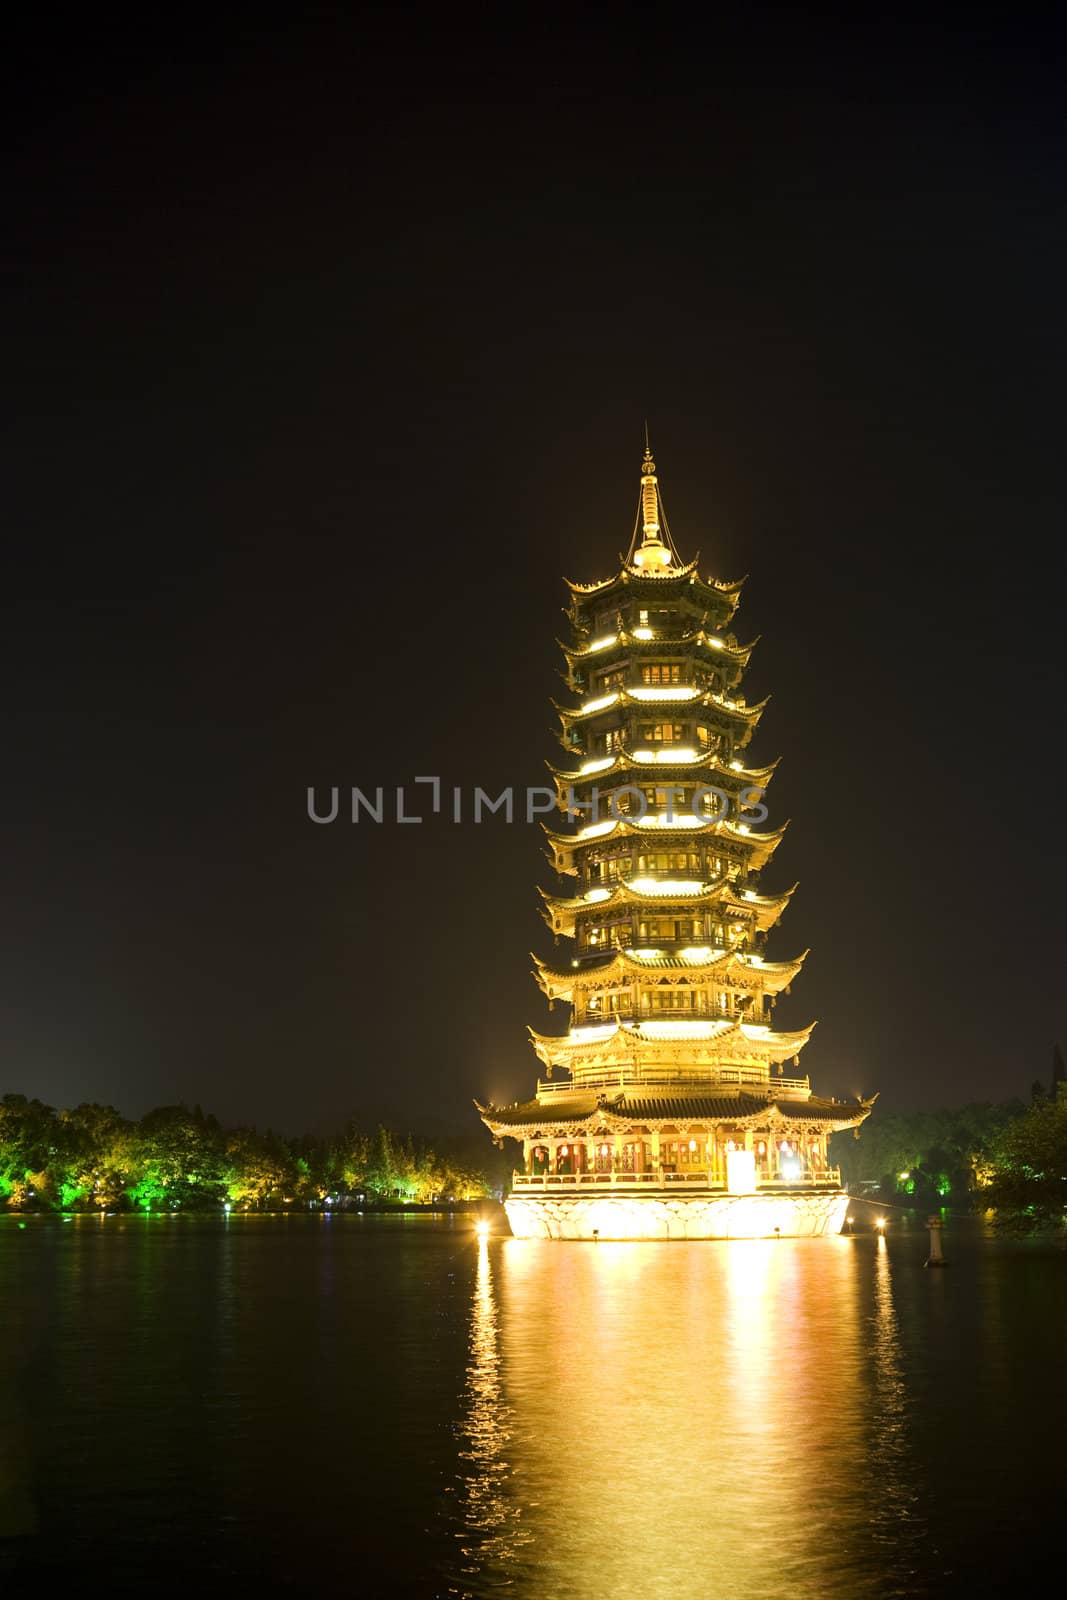 Sun Pagoda, Guilin, China by shariffc